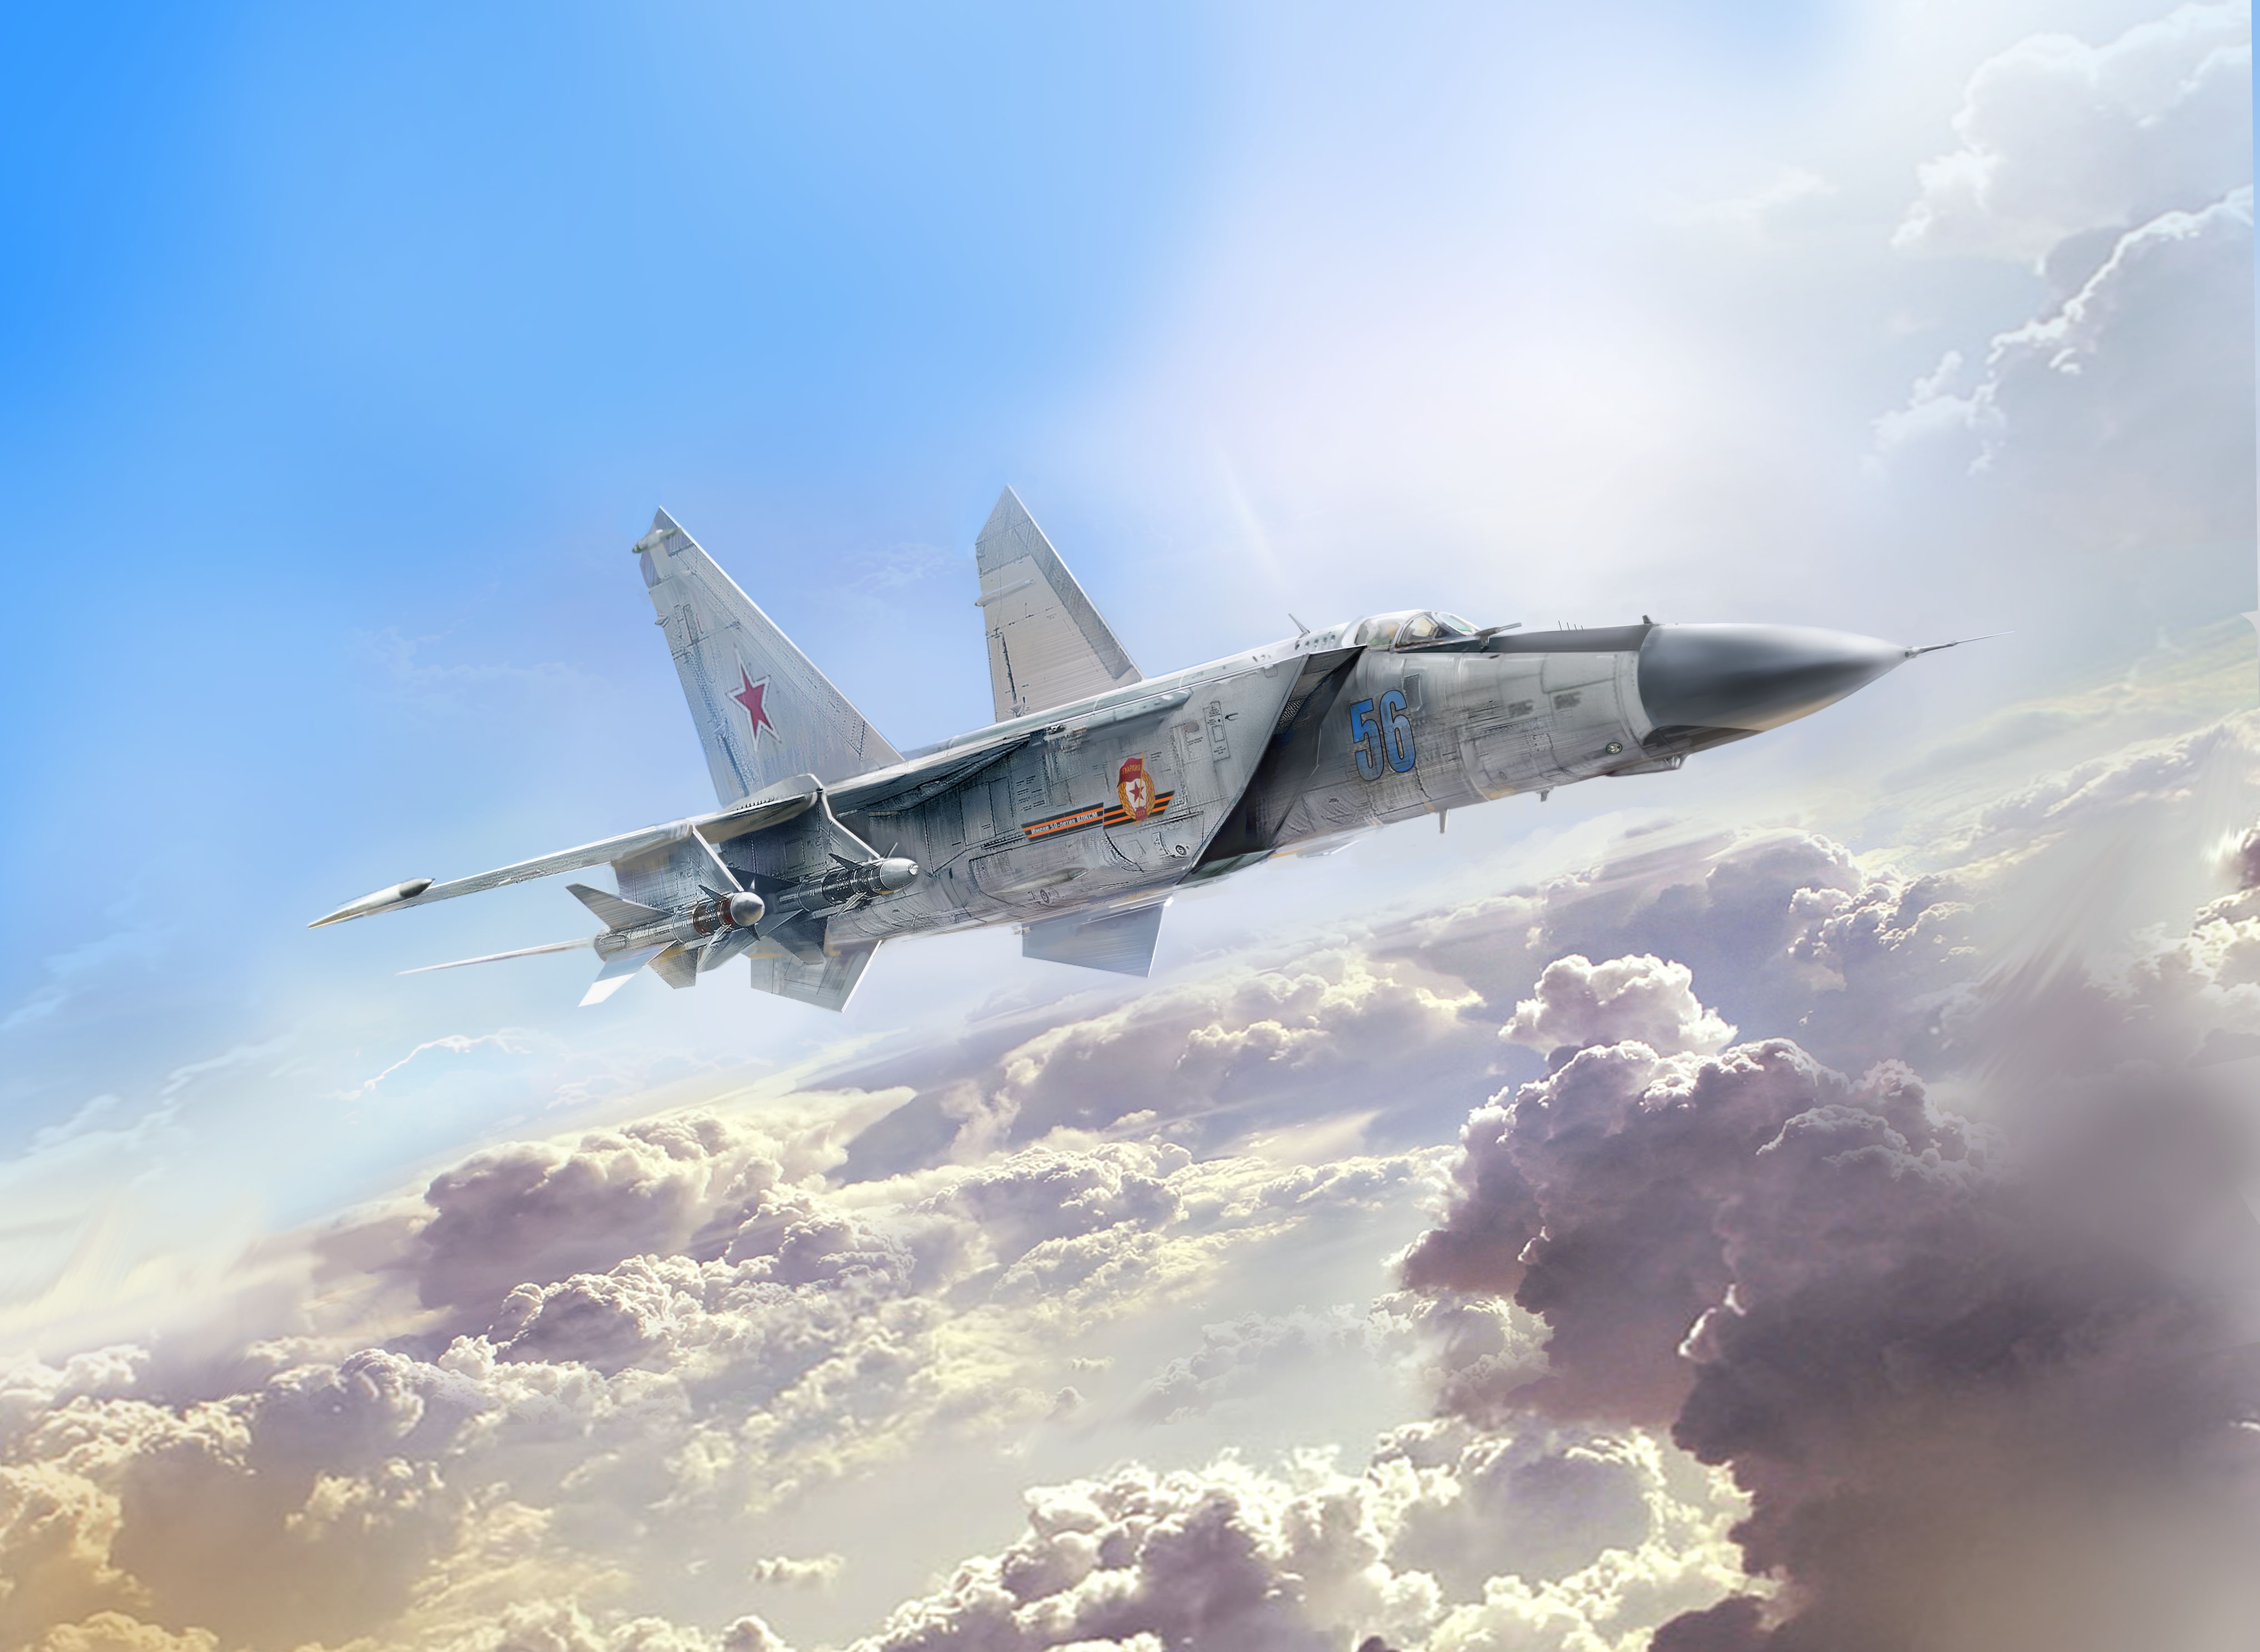 Painting_Art_Fighter_Airplane_Ivan_Khivrenko_572444_4973x3635.jpg